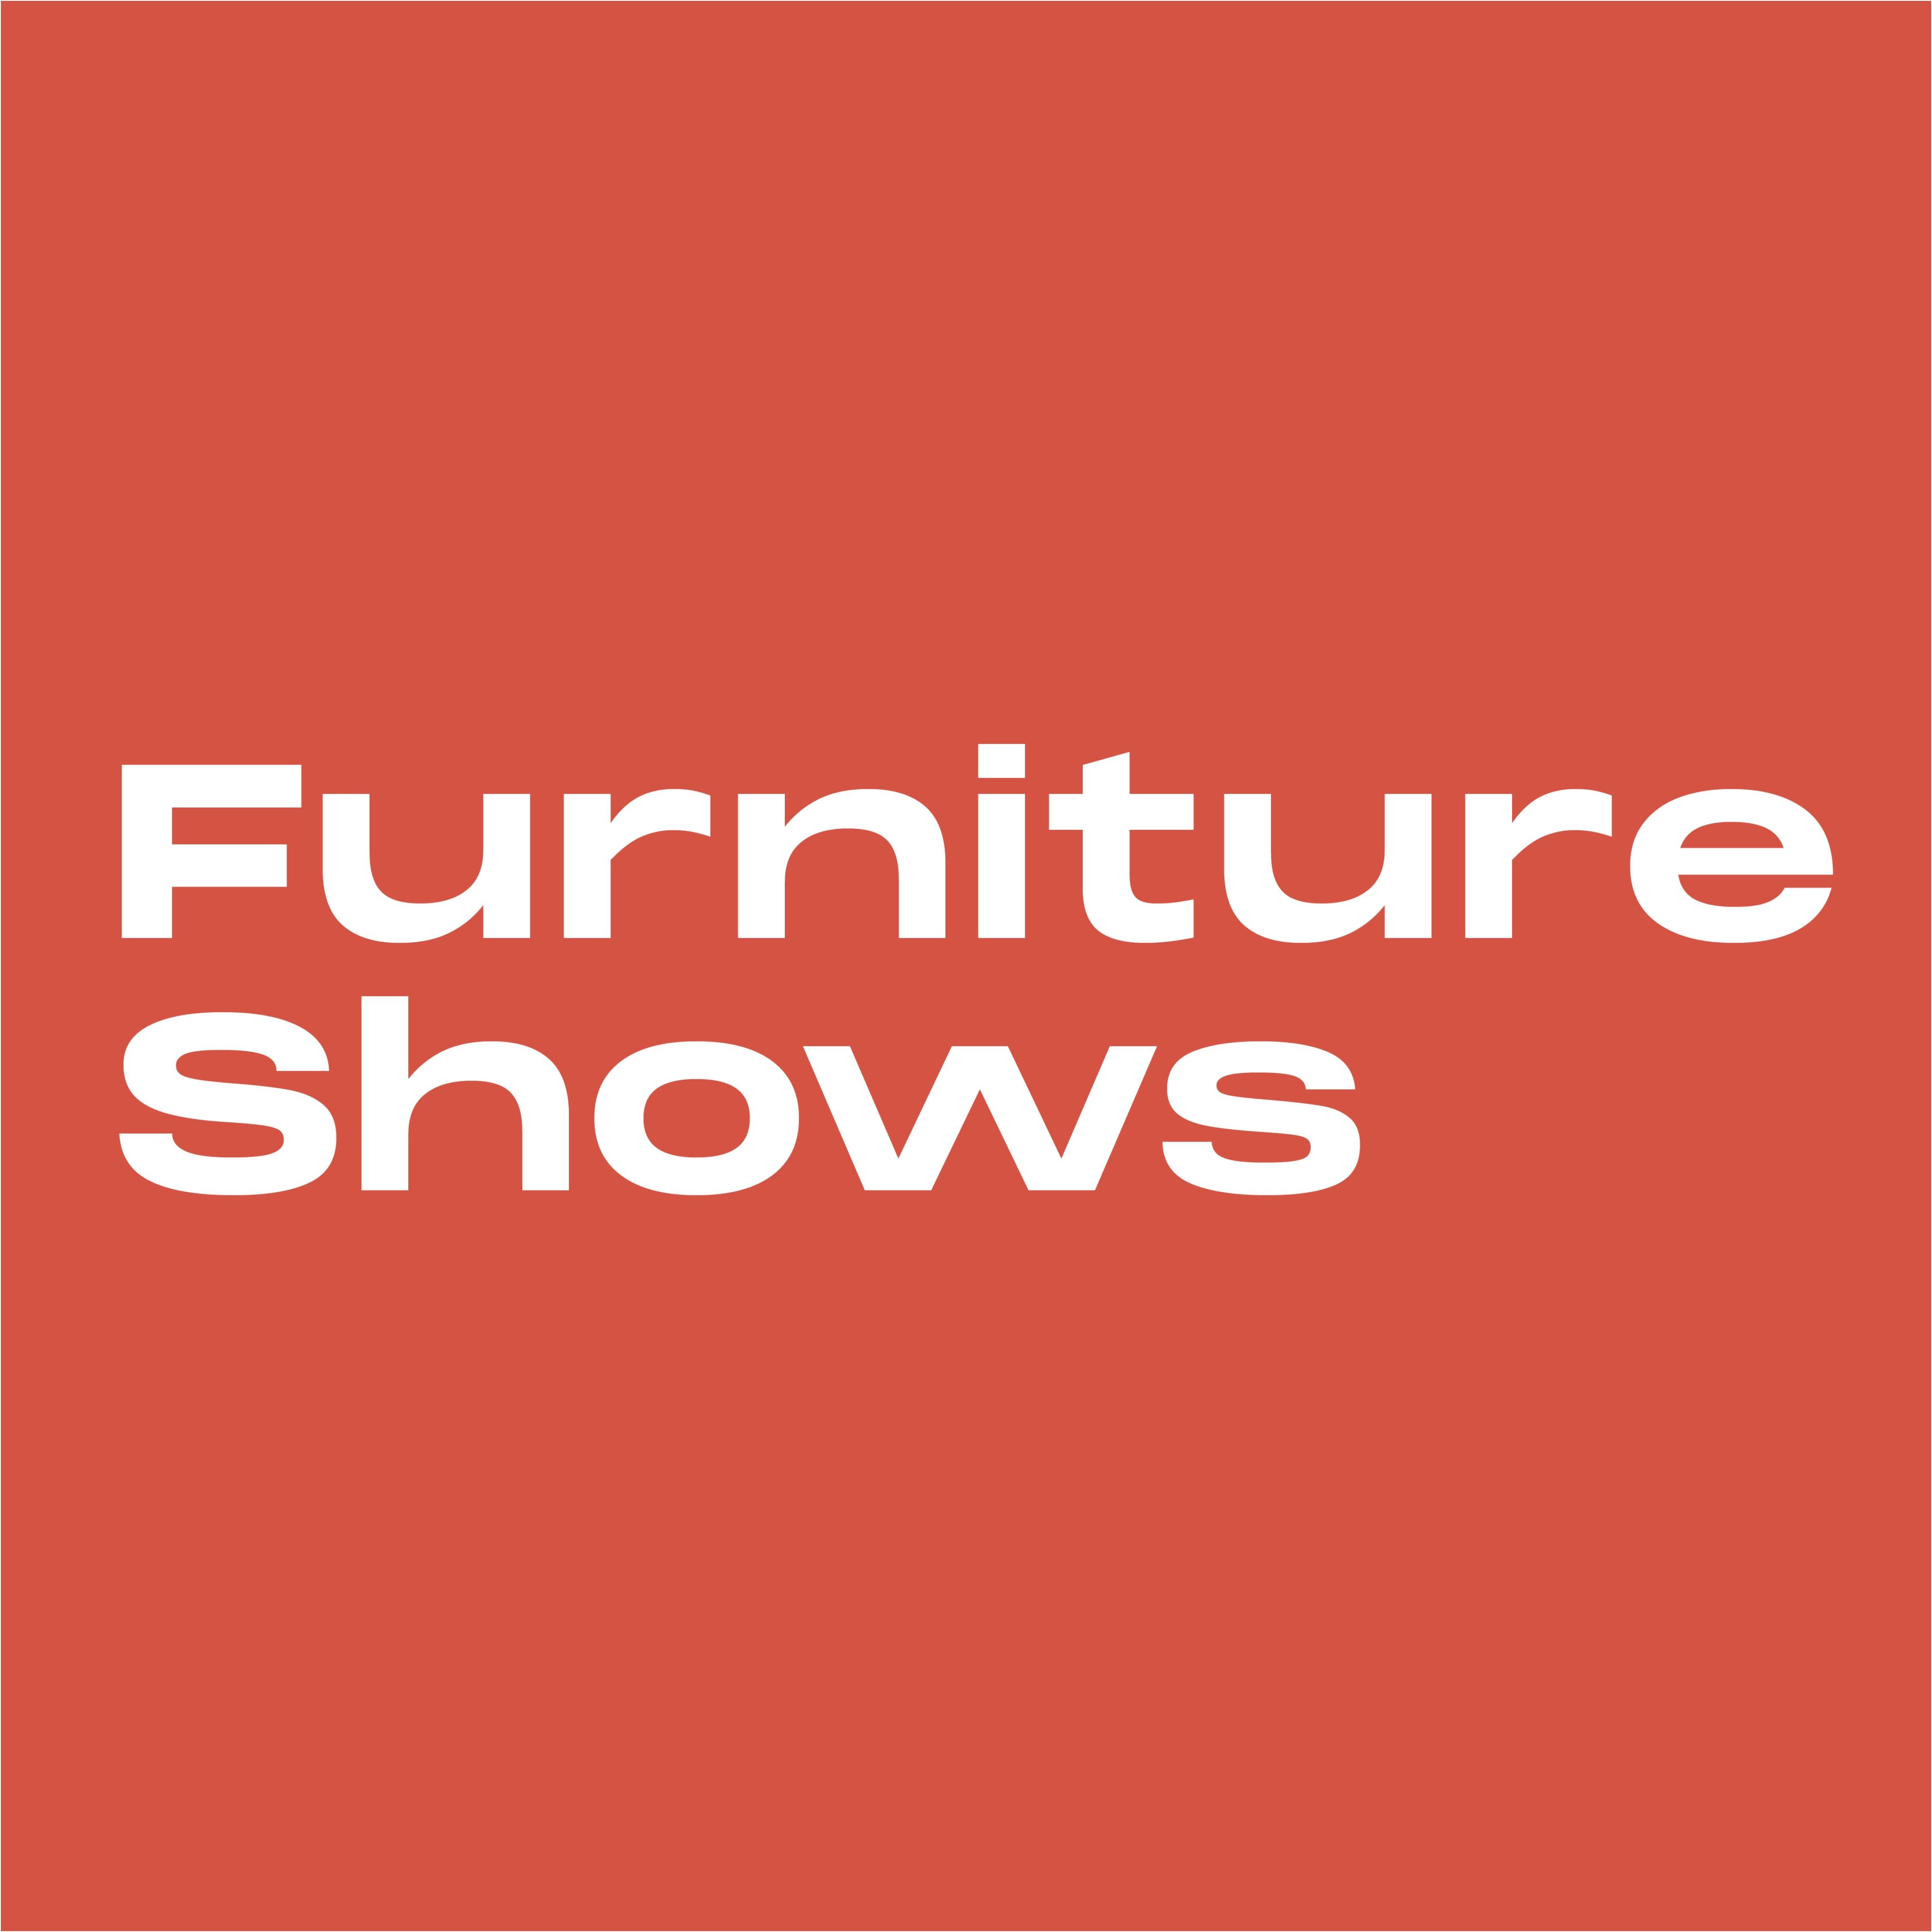 January Furniture Show